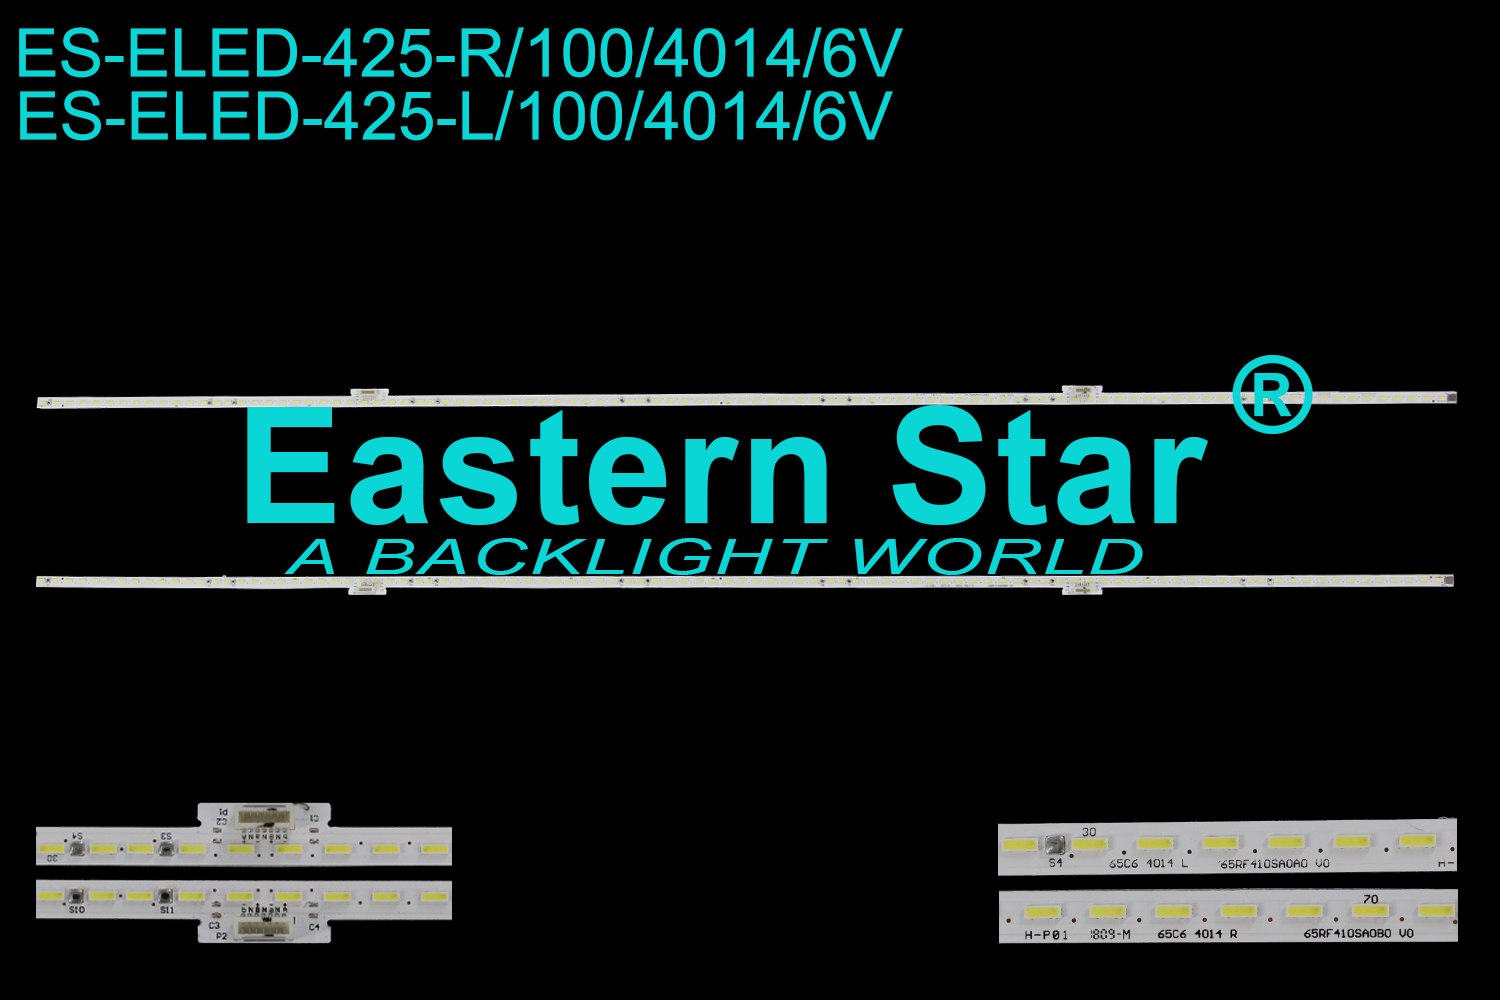 ES-ELED-425 ELED/EDGE TV backlight use for 65'' Tcl 65Q2 65C6 65C6 4014 L 65RF410SA0A0  65C6 4014 R 65RF410SA0B0 LED STRIPS(2)